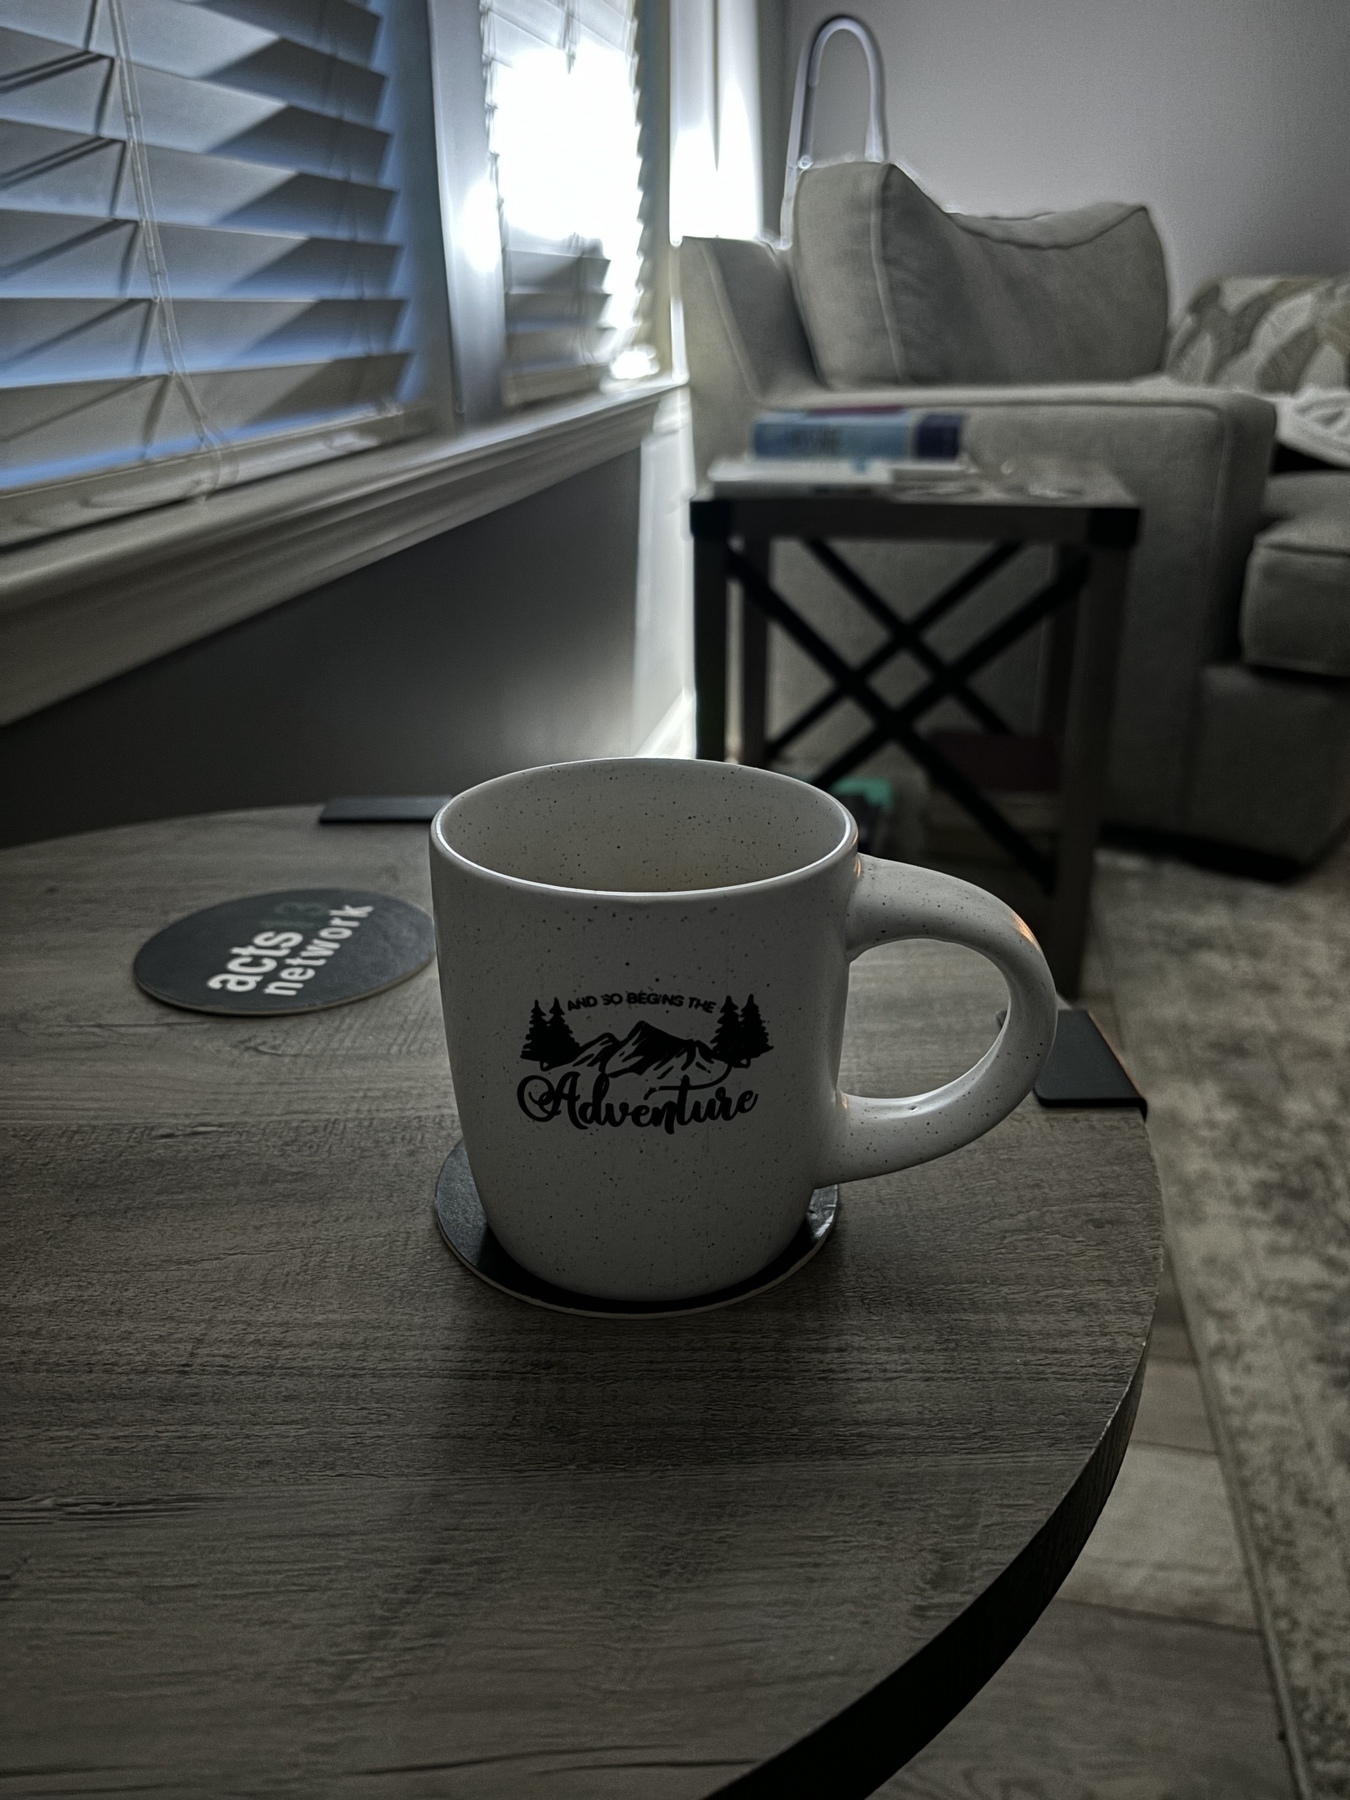 A coffee mug on side table. The coffee mug reads, “let the adventure begin.”